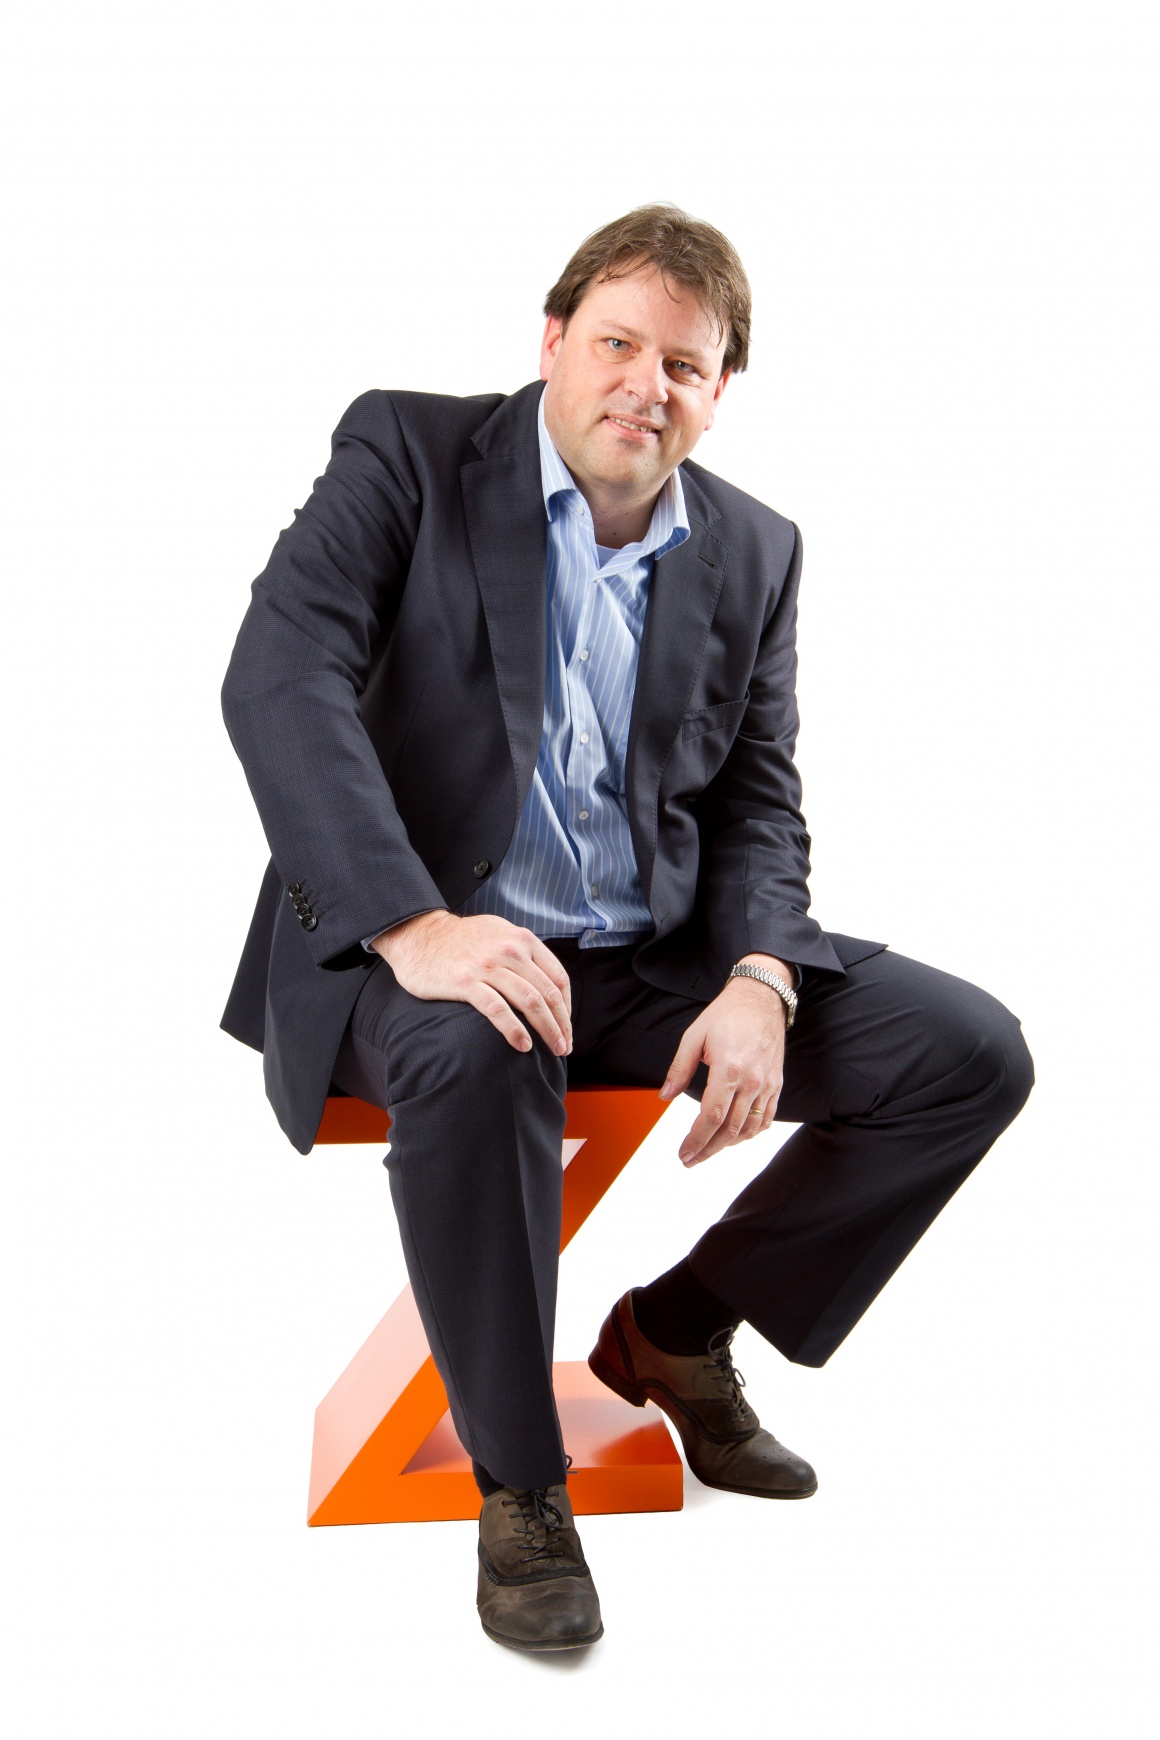 A man in a suit sitting on an orange Z